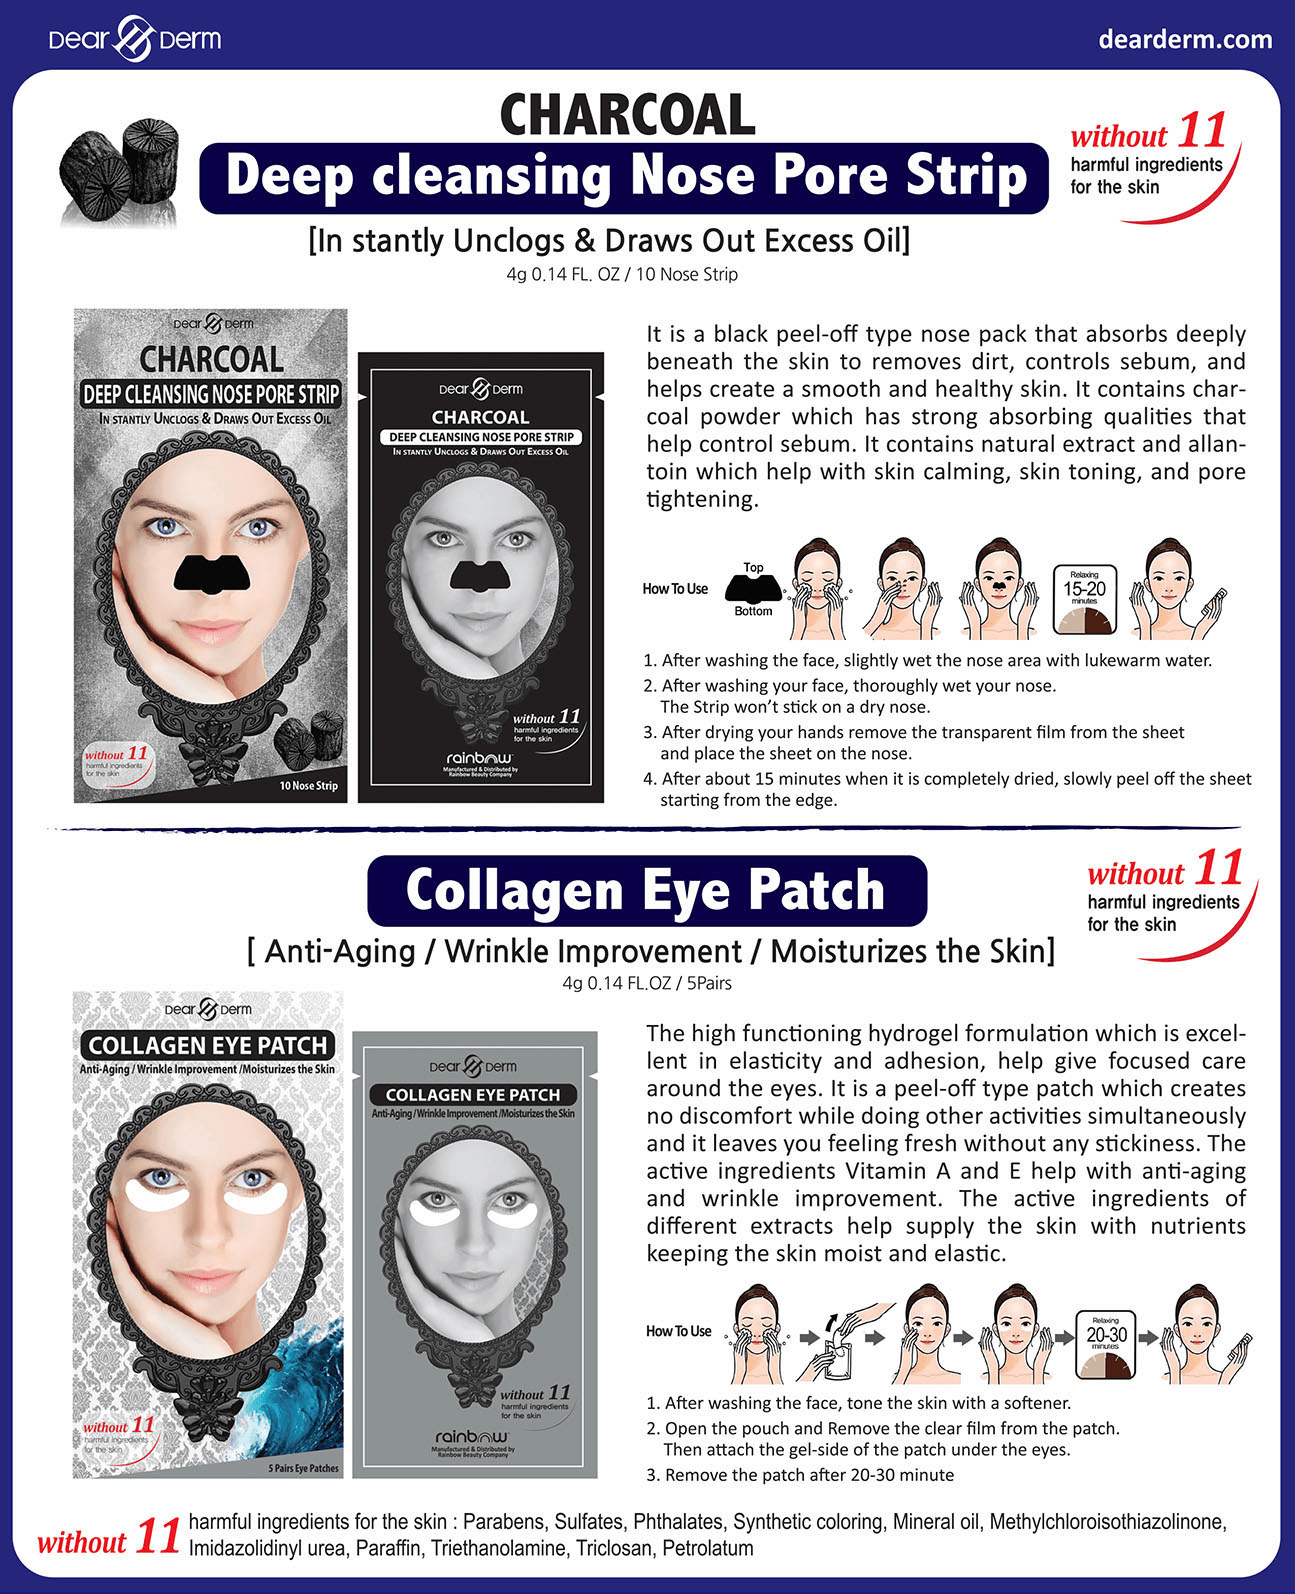 DEARDERM Charcoal Deep Cleansing Nose Pore Strip